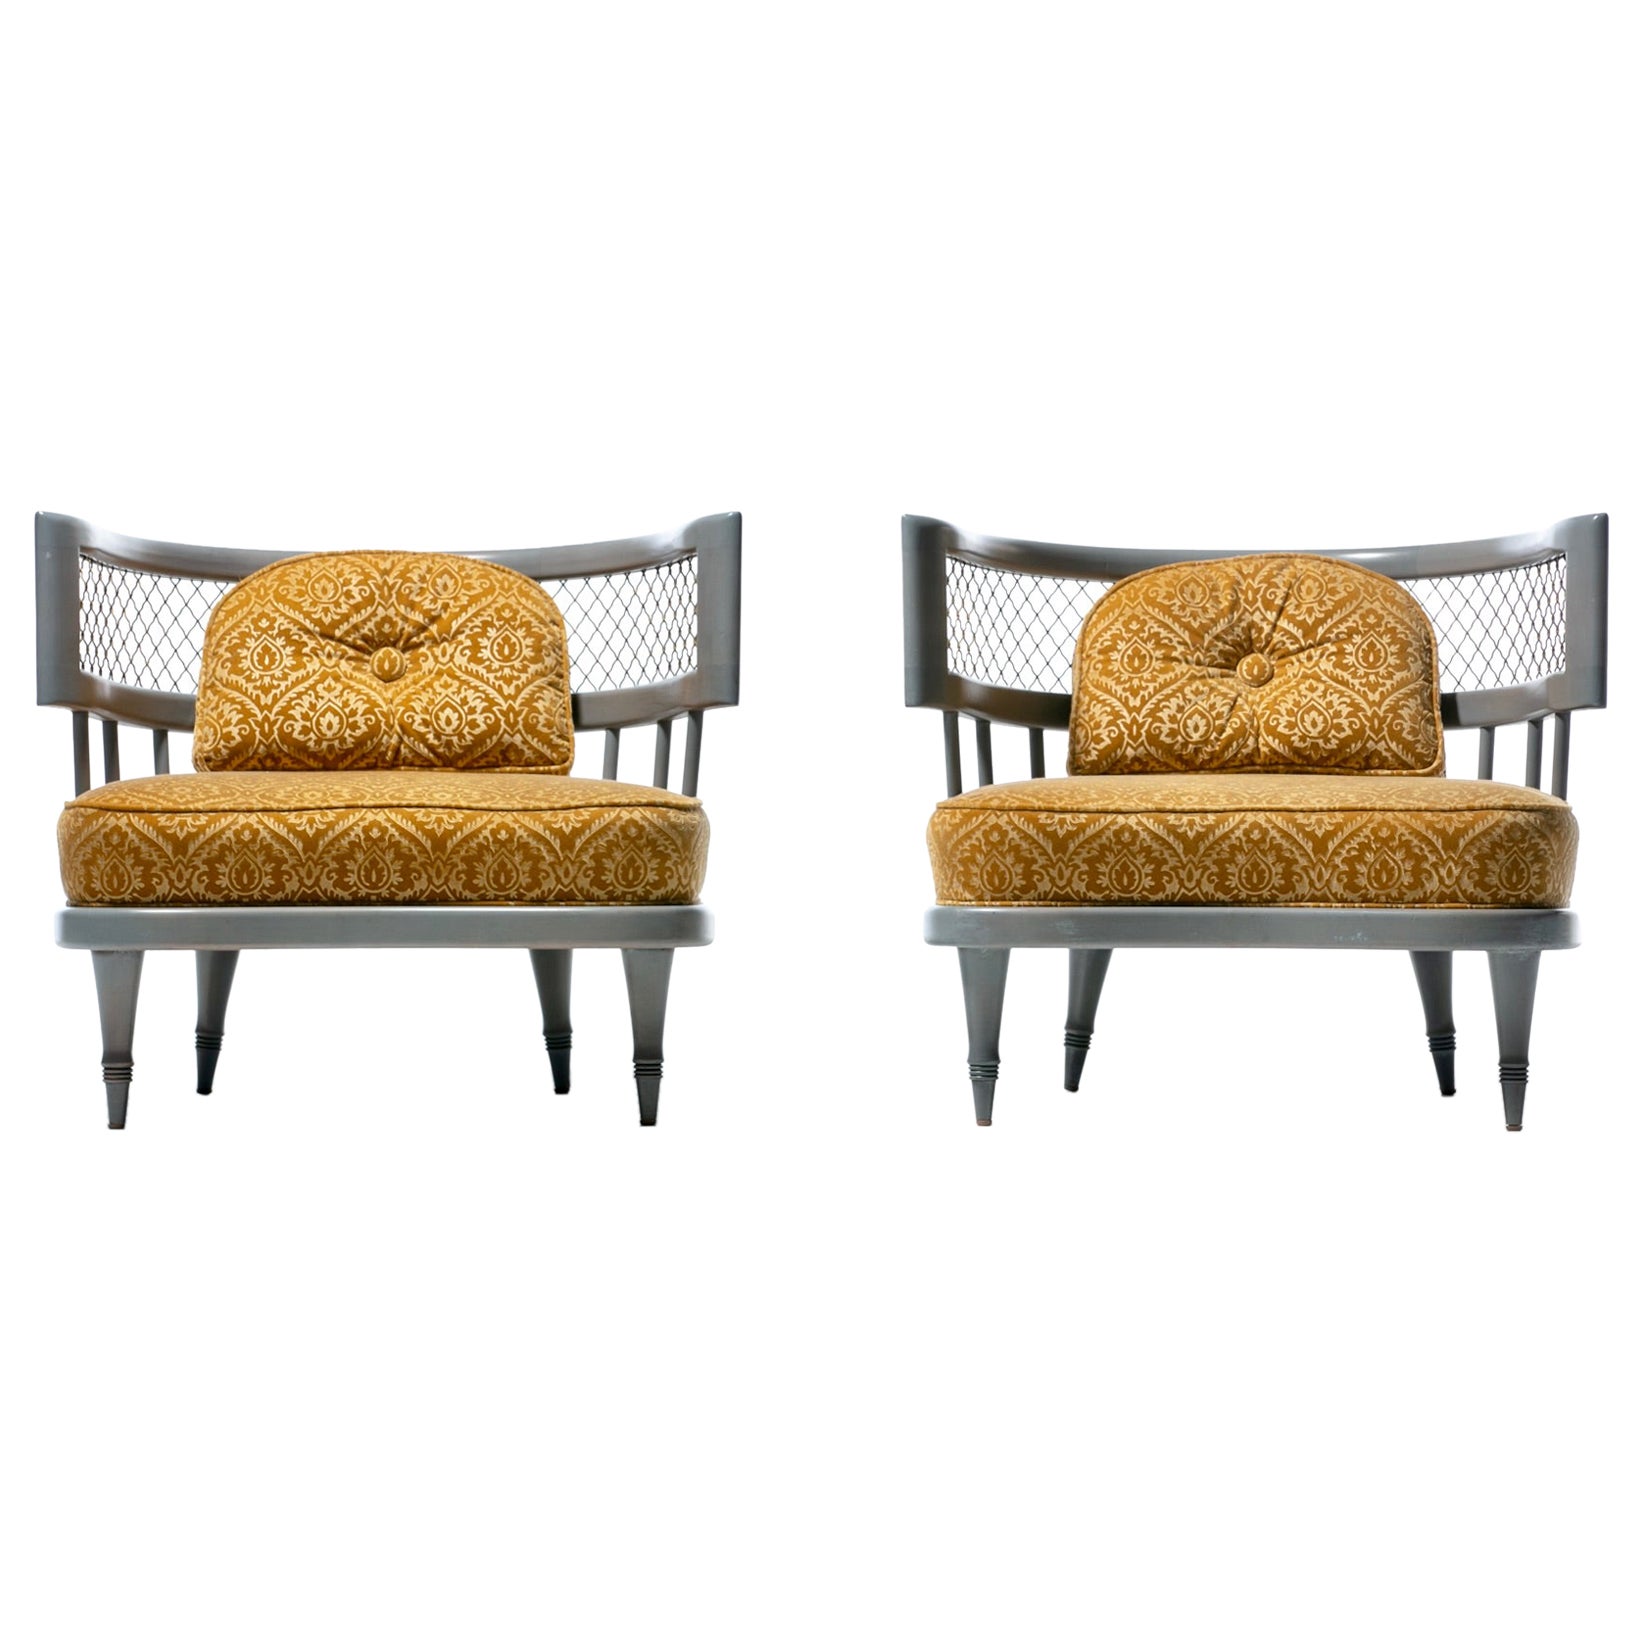 Hollywood Regency Slipper Chairs of Walnut and Brass in Italian Cut Velvet